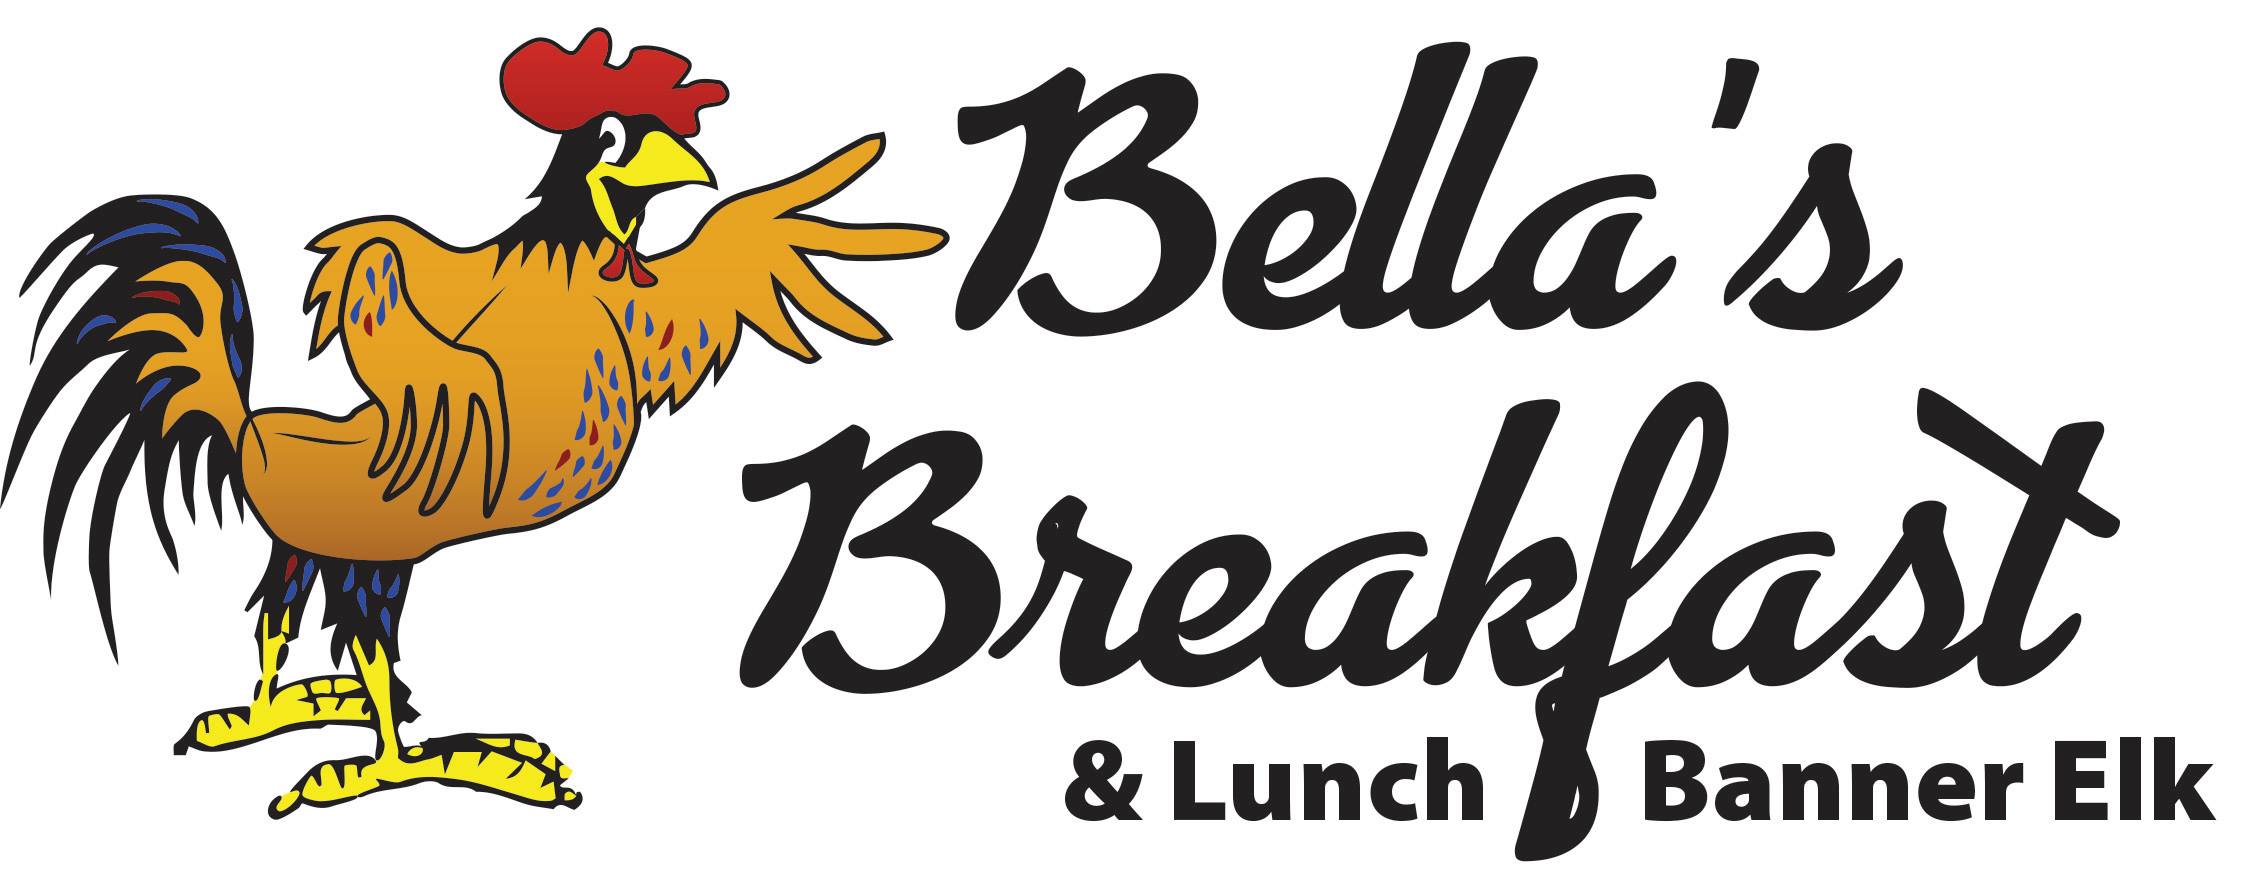 Best Banner Elk Breakfast and Lunch-Bellas Breakfast